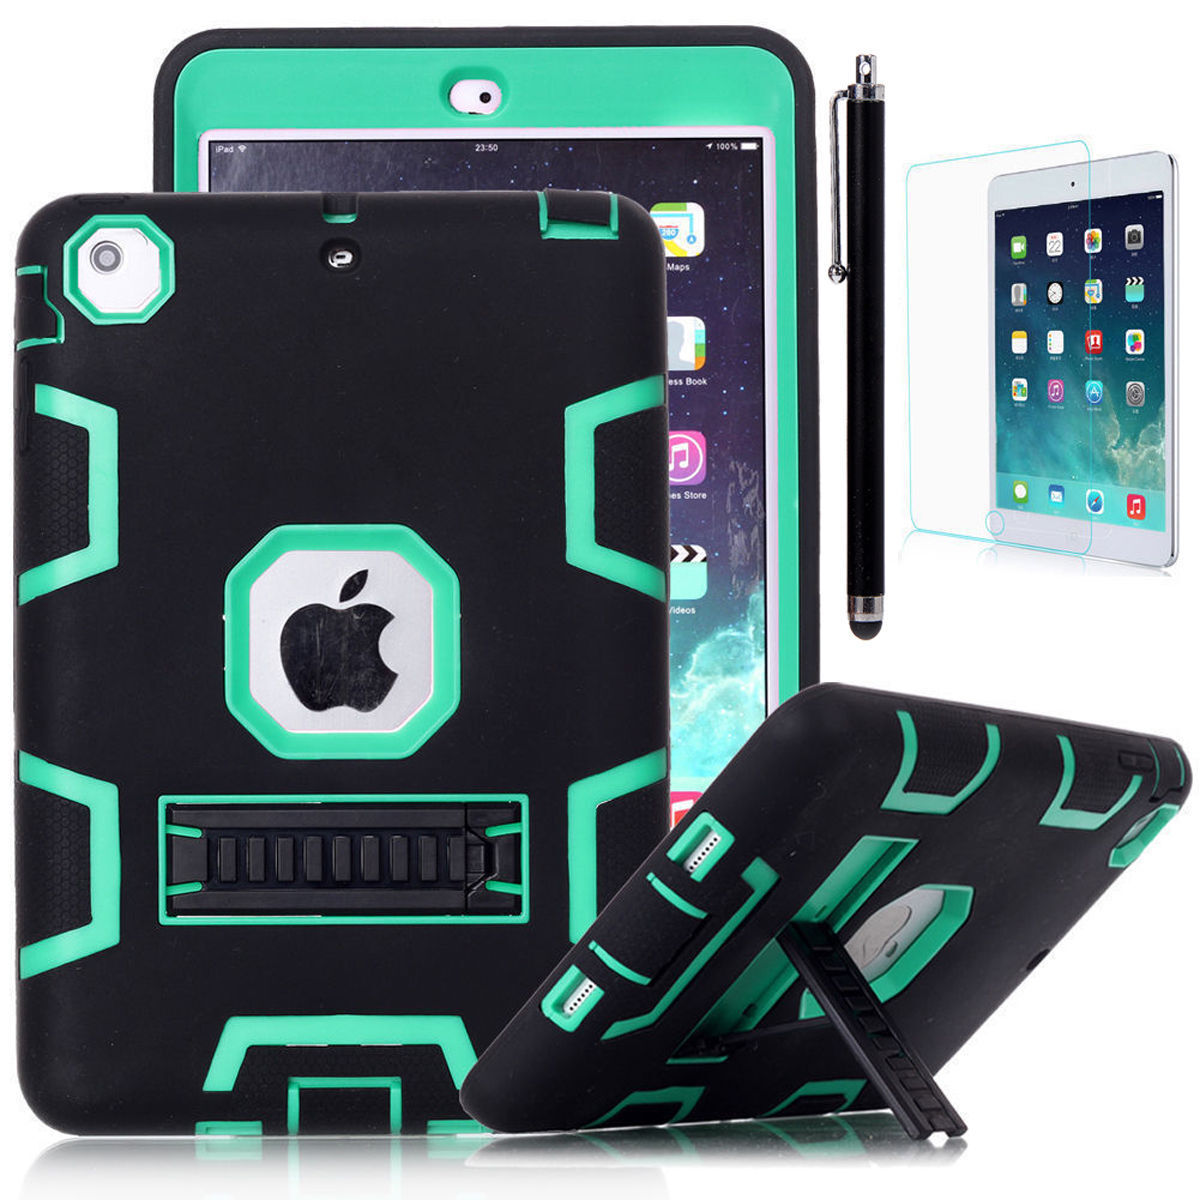 Shockproof Heavy Duty Case Cover For iPad Mini 1/2/3/4/5, Air 1 2, iPad 2/3/4